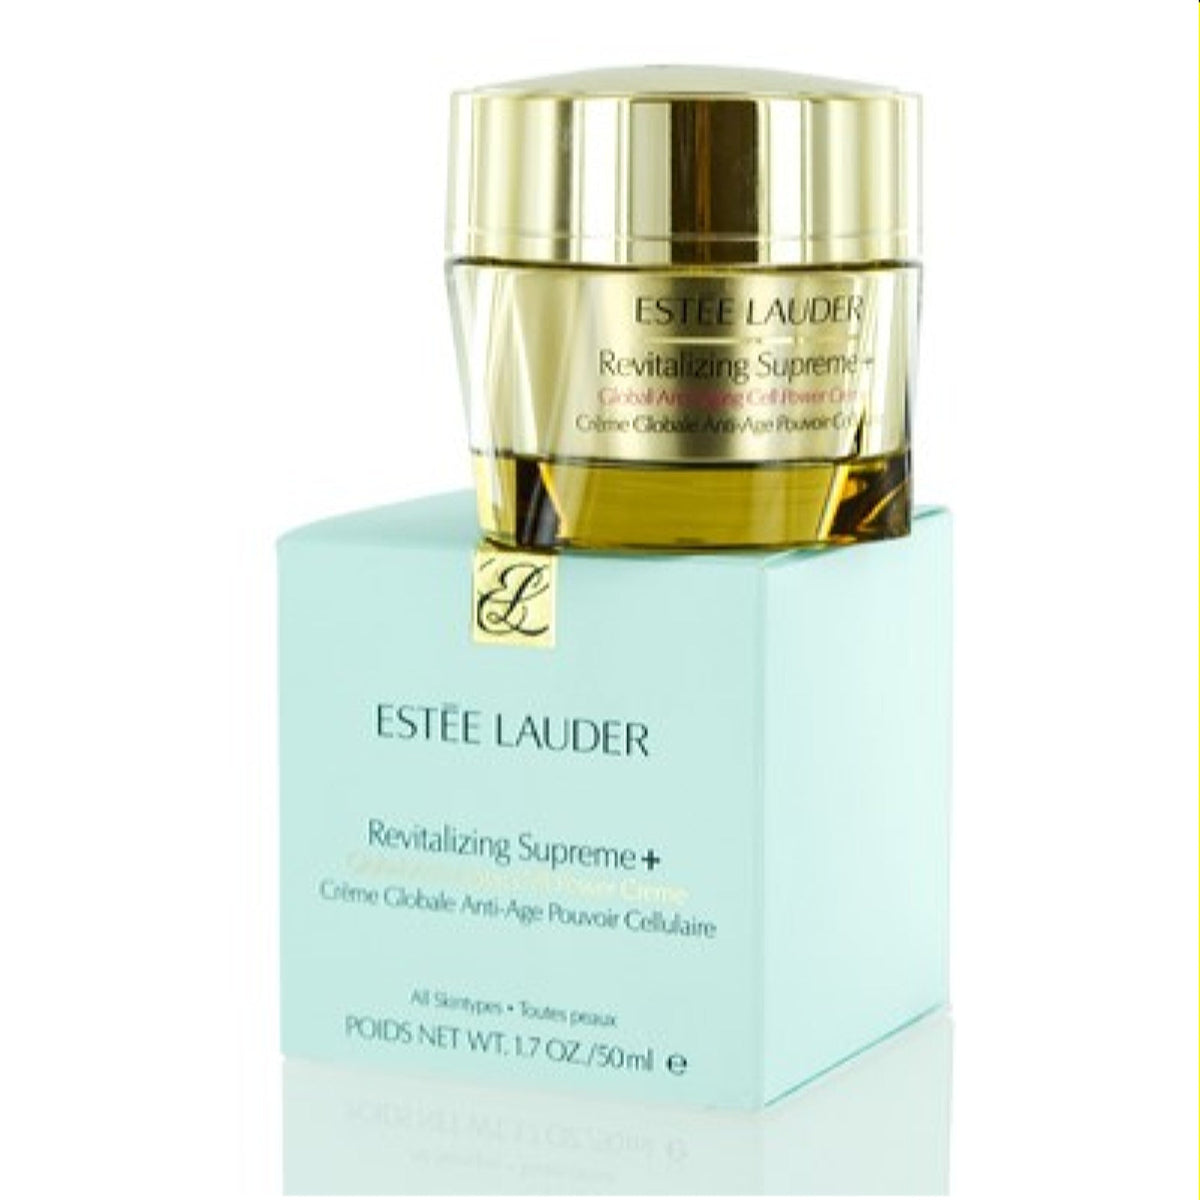 Estee Lauder Revitalizing Supreme+ Global Anti-Aging Cell Power Cream 1.7 Oz RJ18